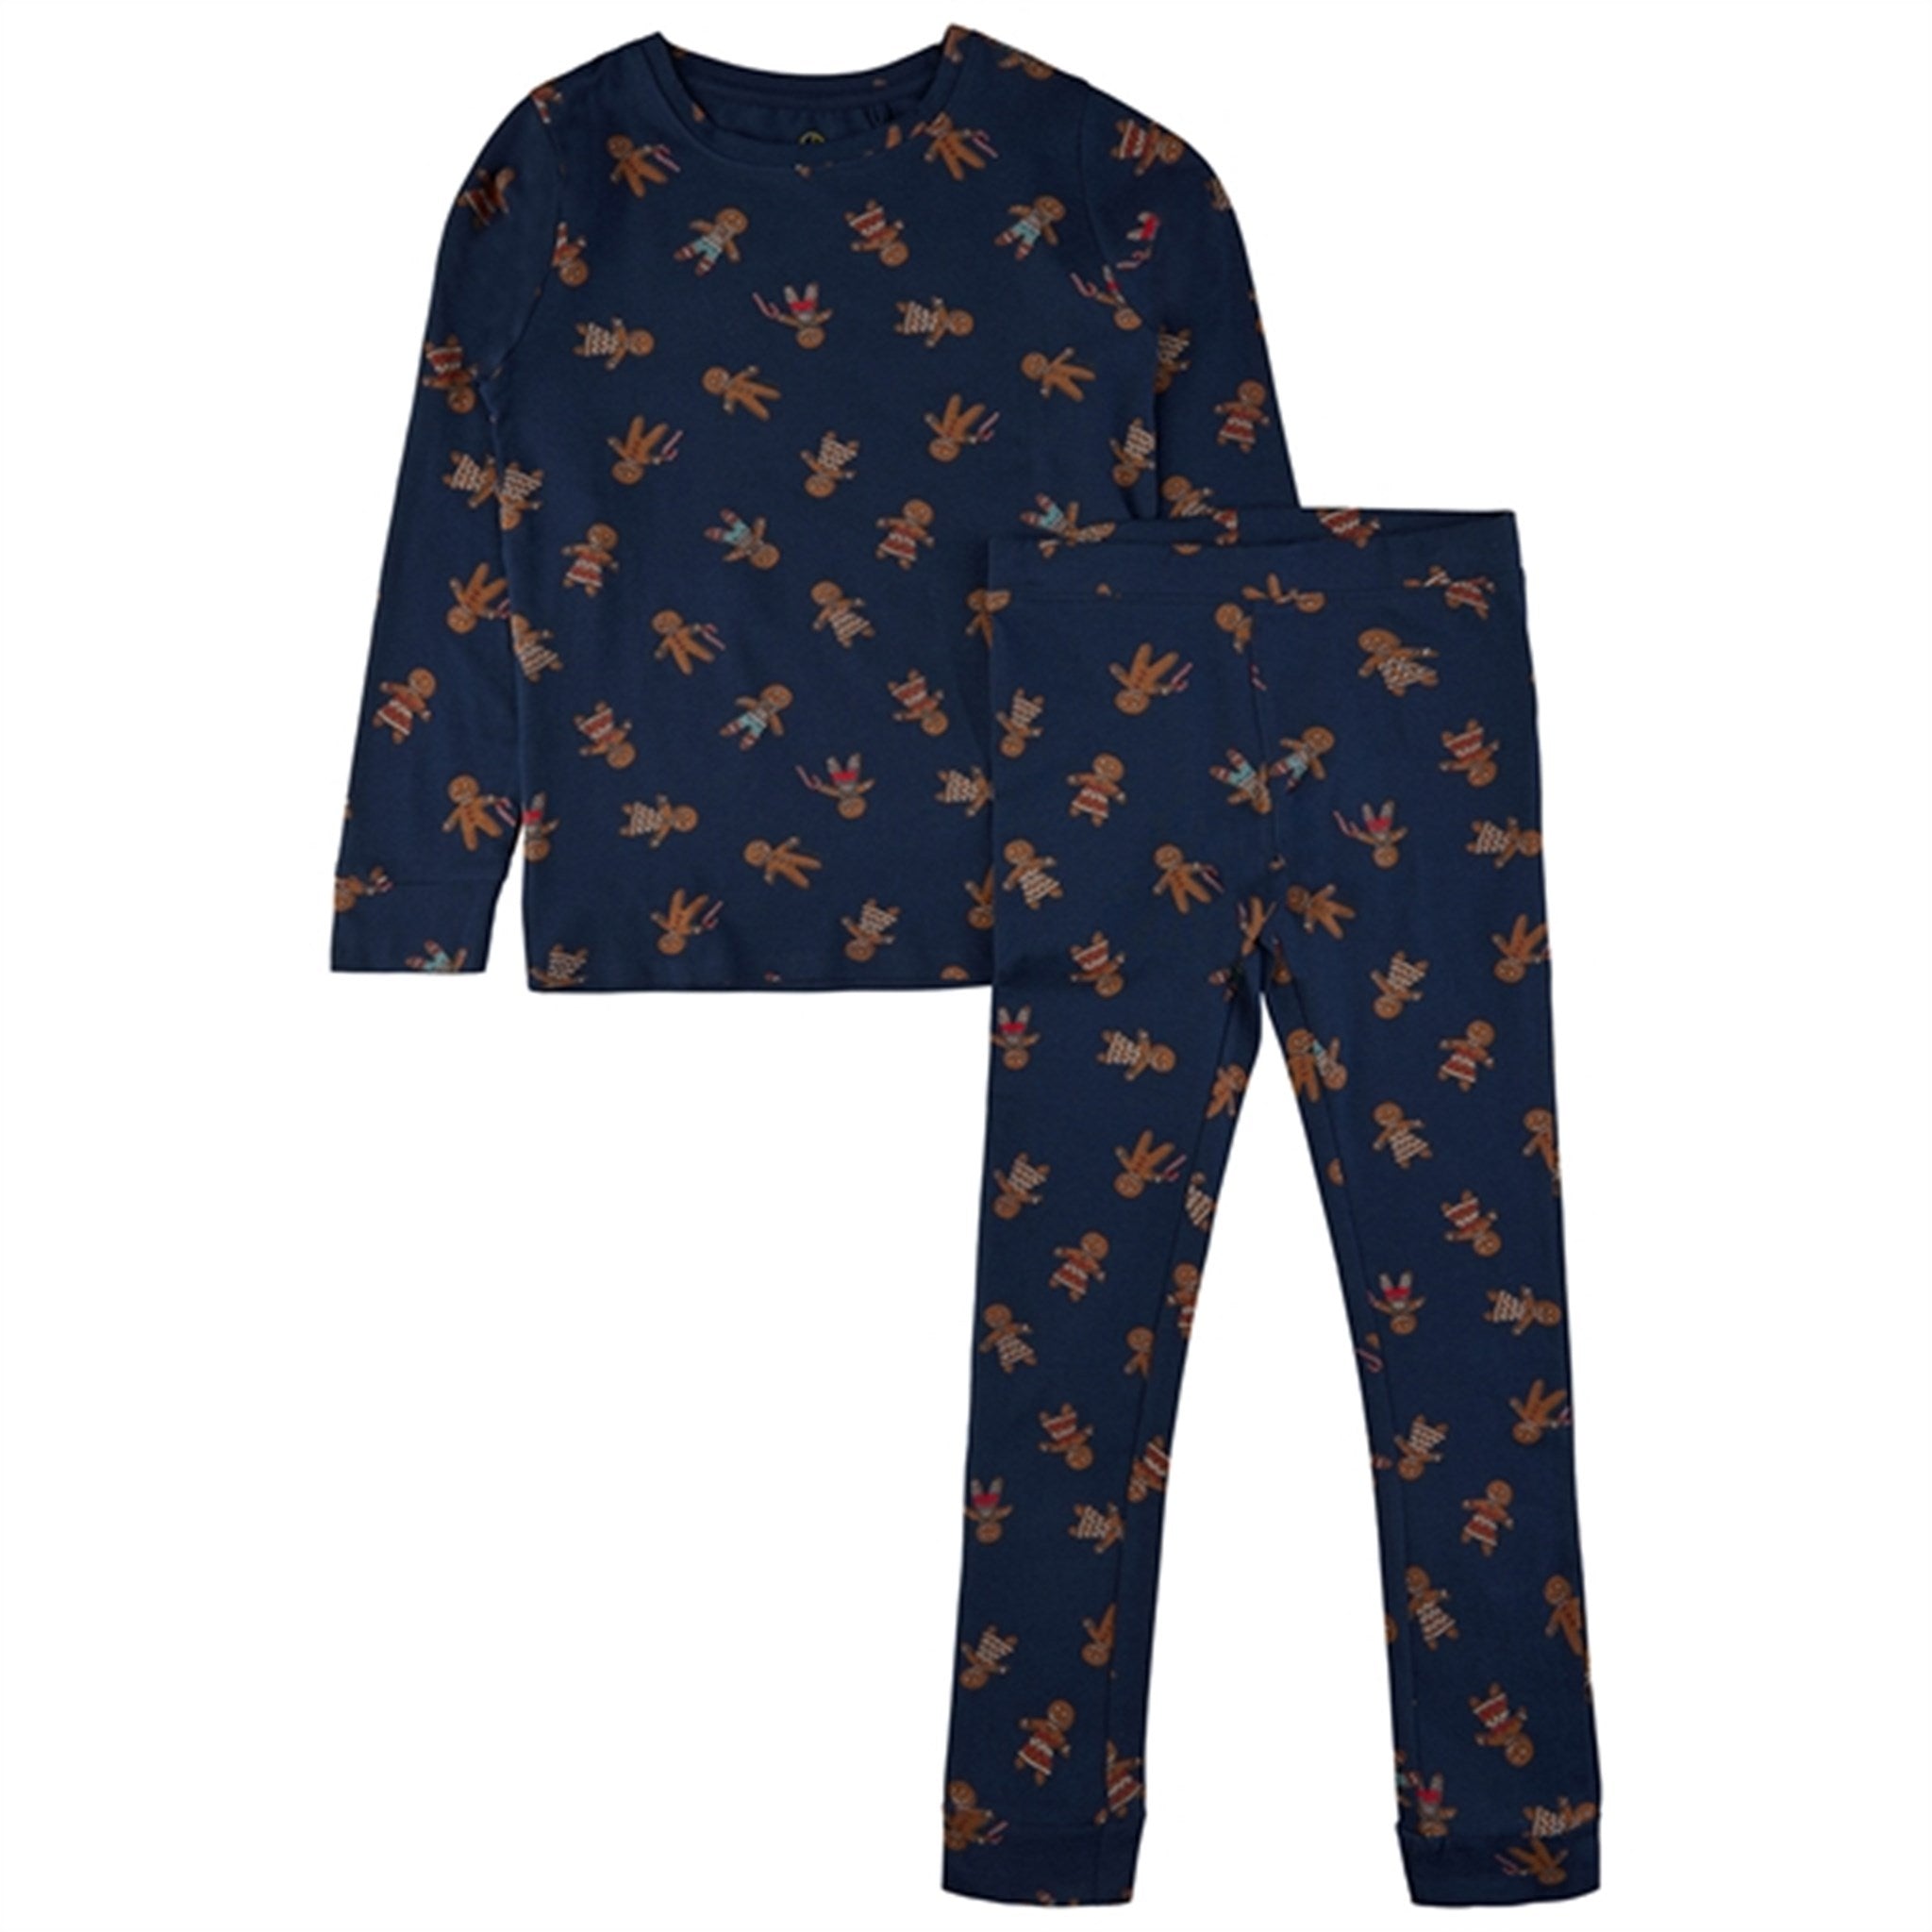 The New Navy Blazer Ginger Aop Holiday Pyjamas